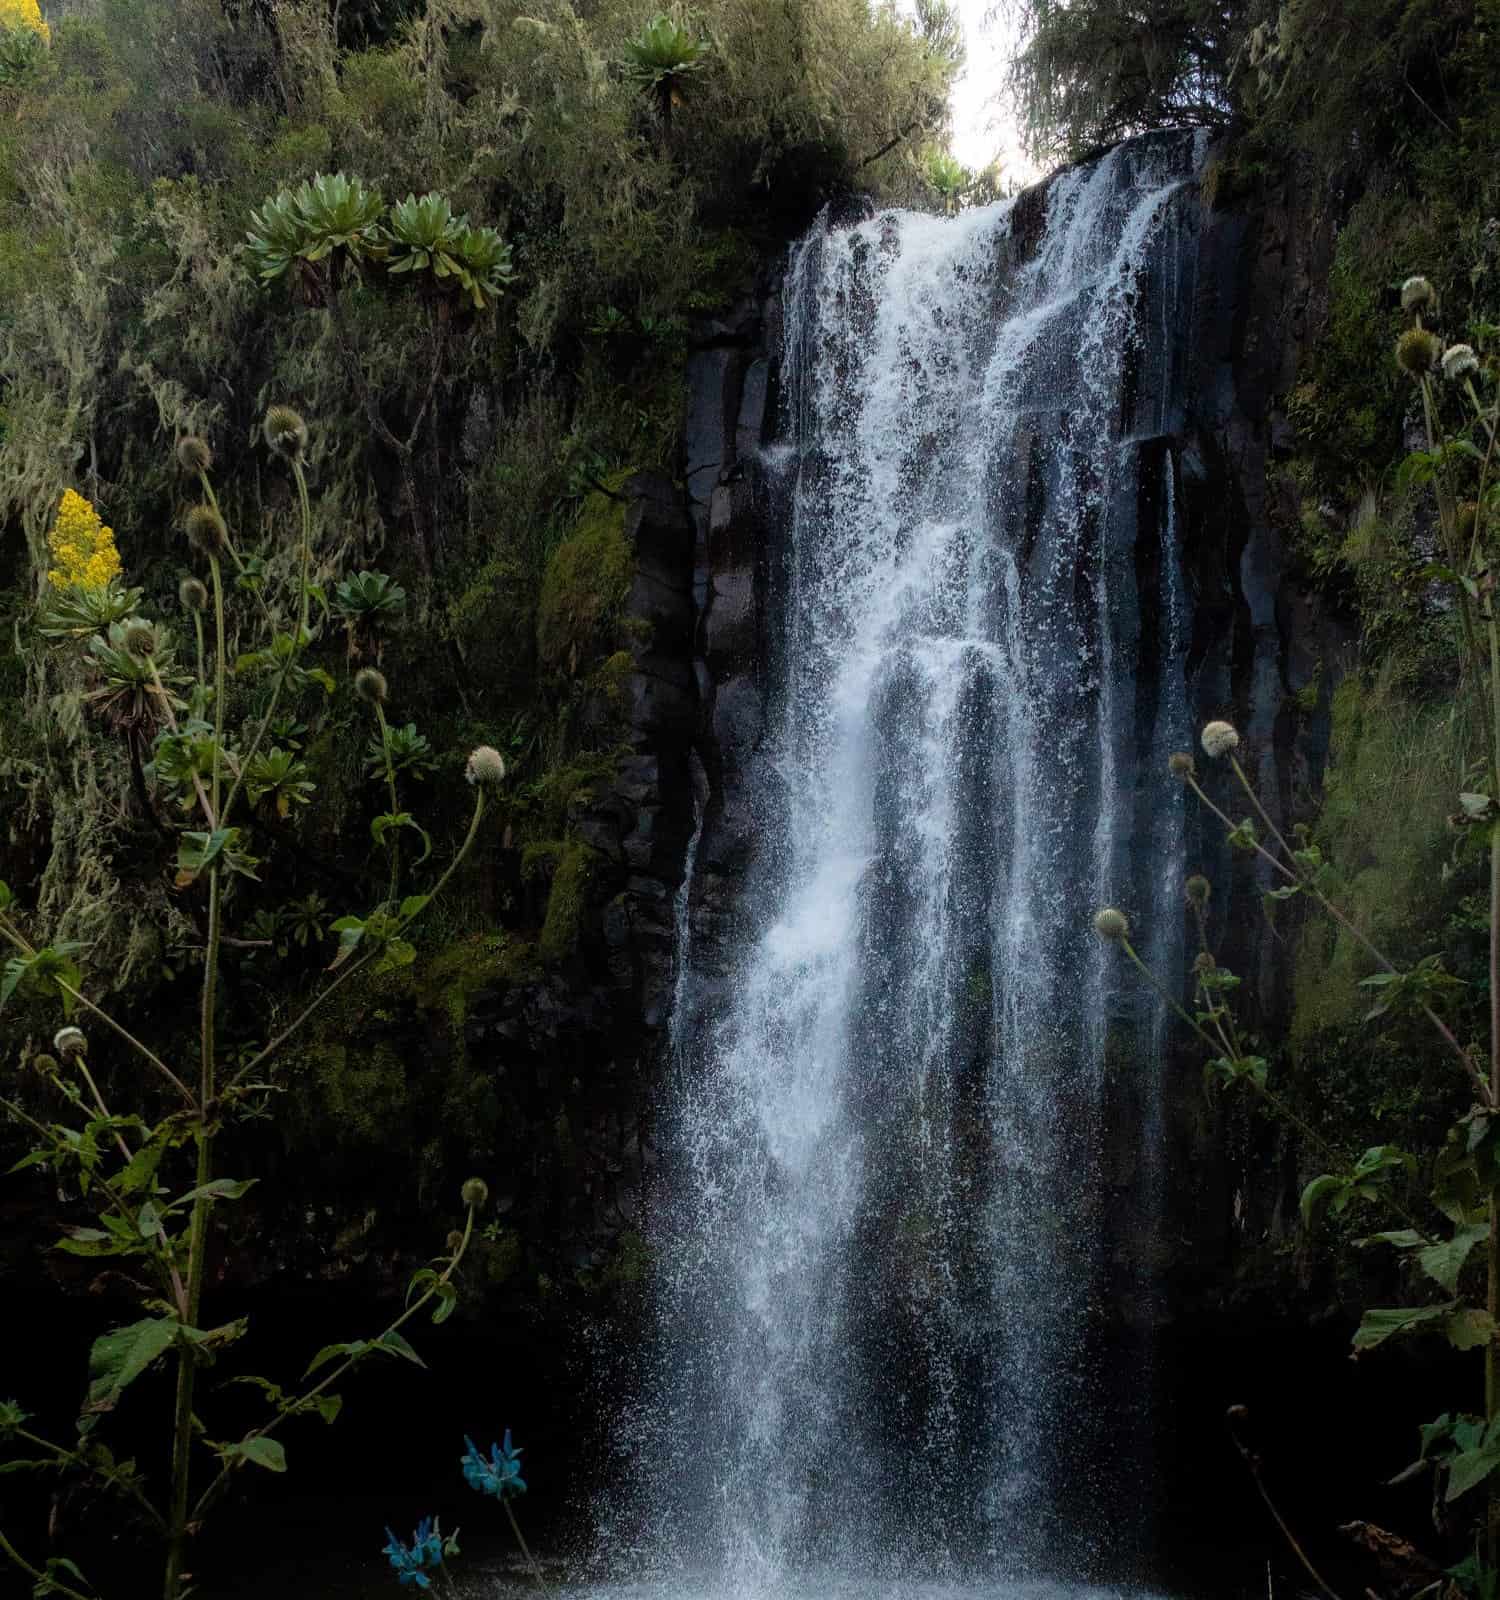 Karuru falls, tallest waterfall in Kenya